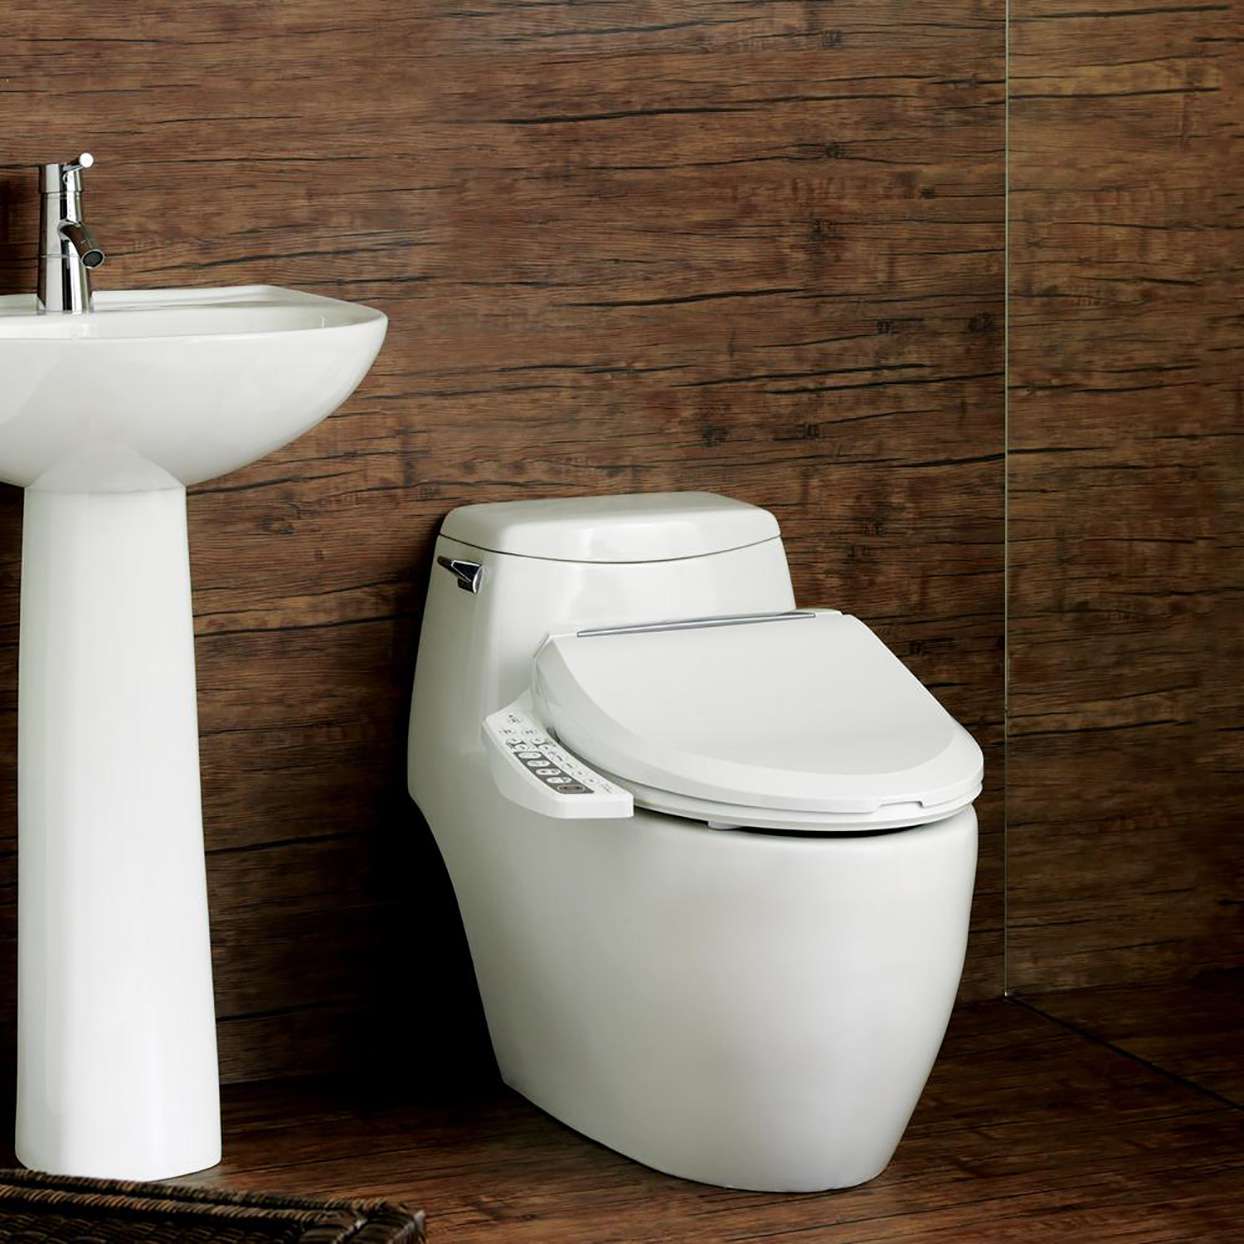 toilet with bidet seat attachment